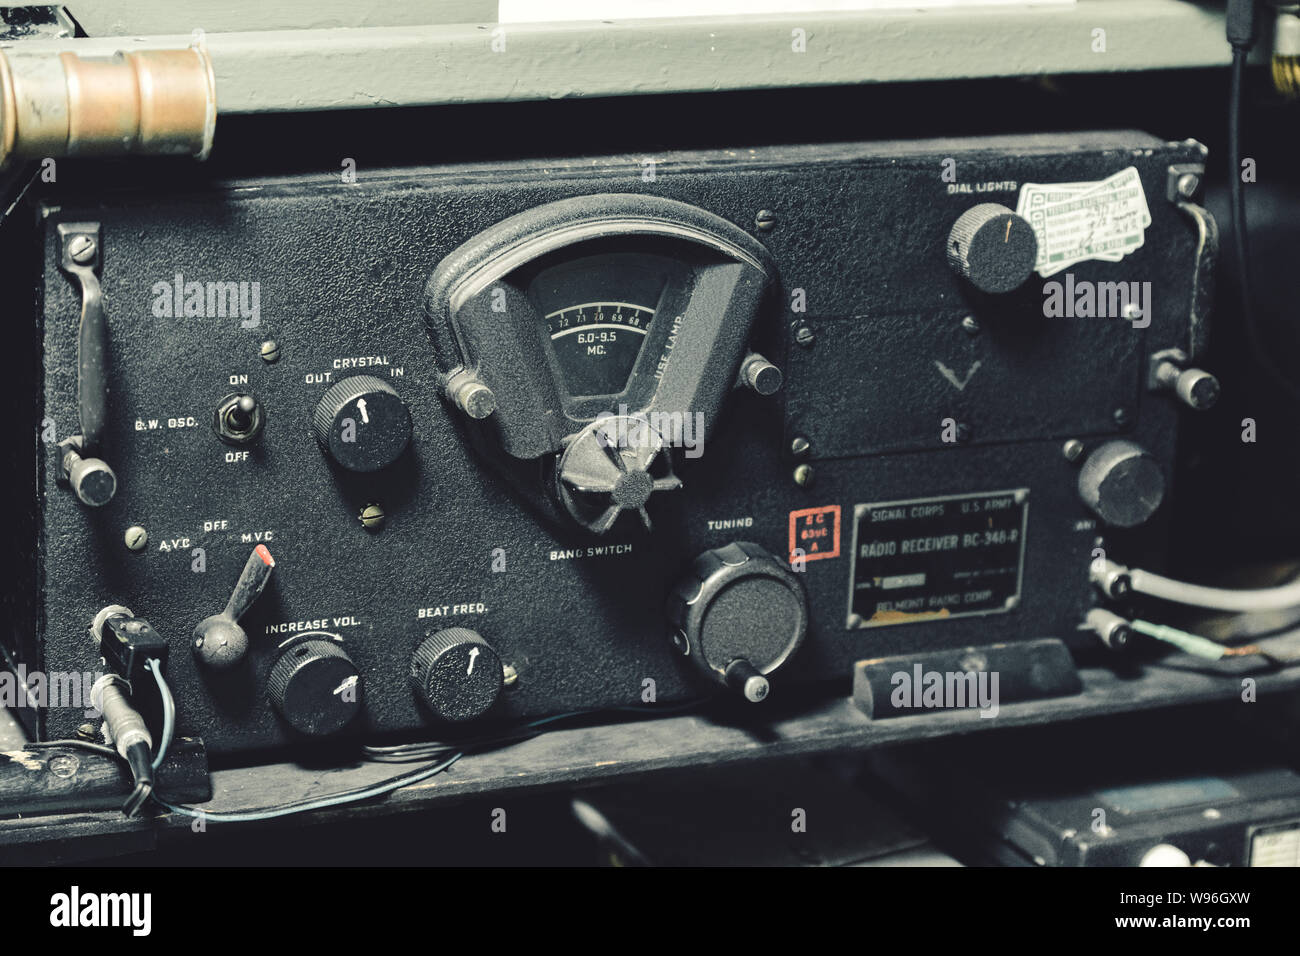 YORK, UK - 6TH AUGUST 2019: A radio receiver bc-348-r on display inside a Douglas Dakota IV aircraft Stock Photo